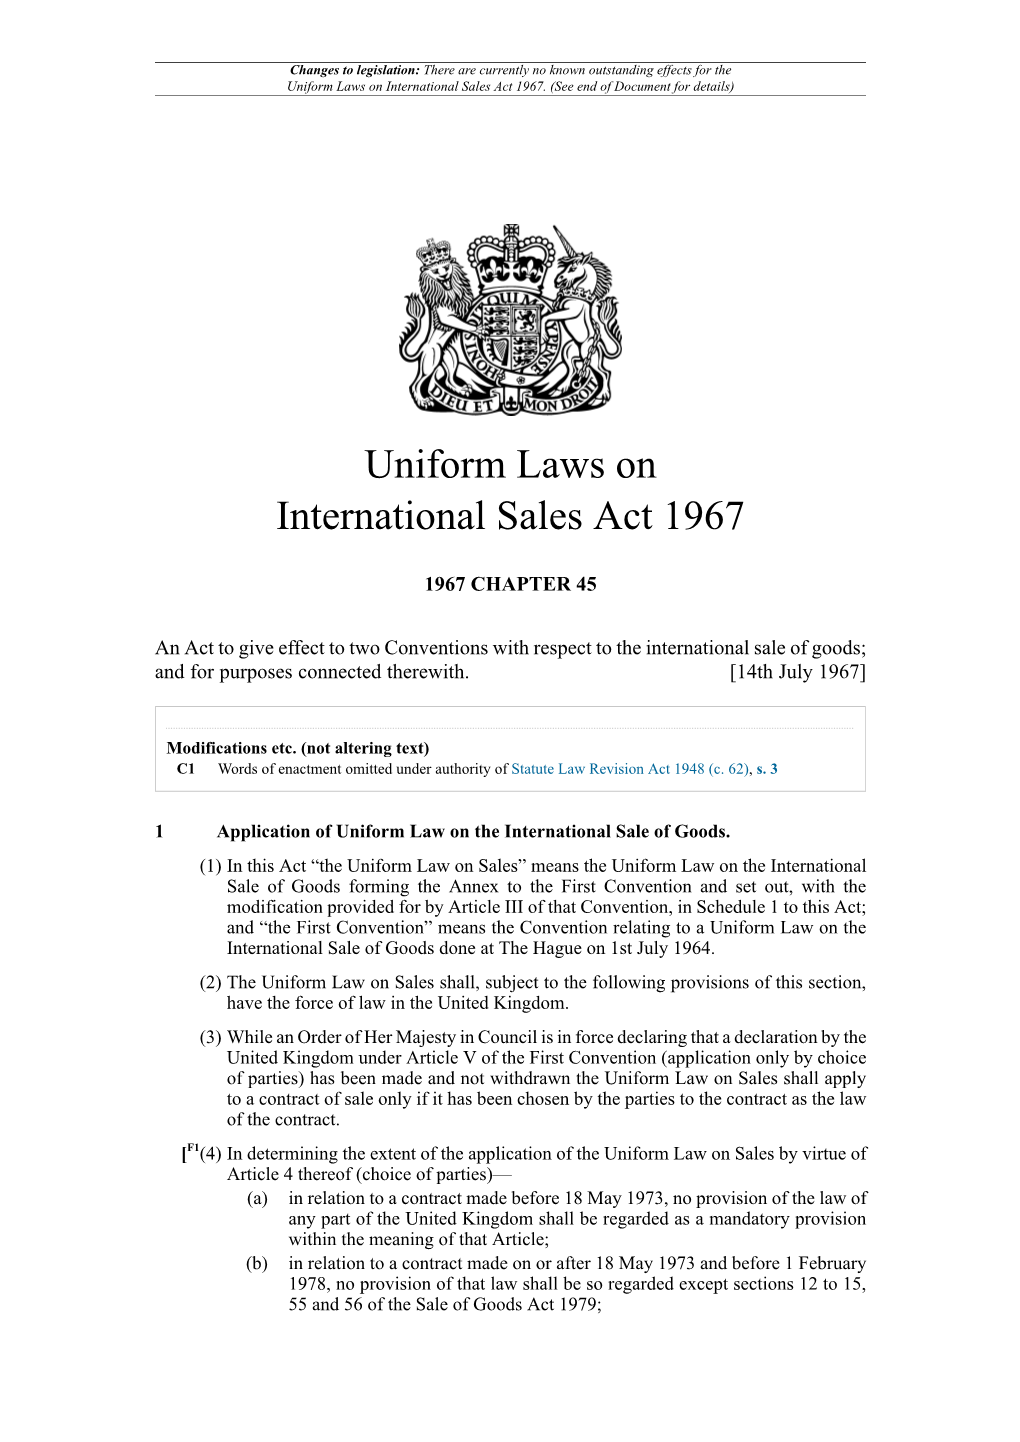 Uniform Laws on International Sales Act 1967